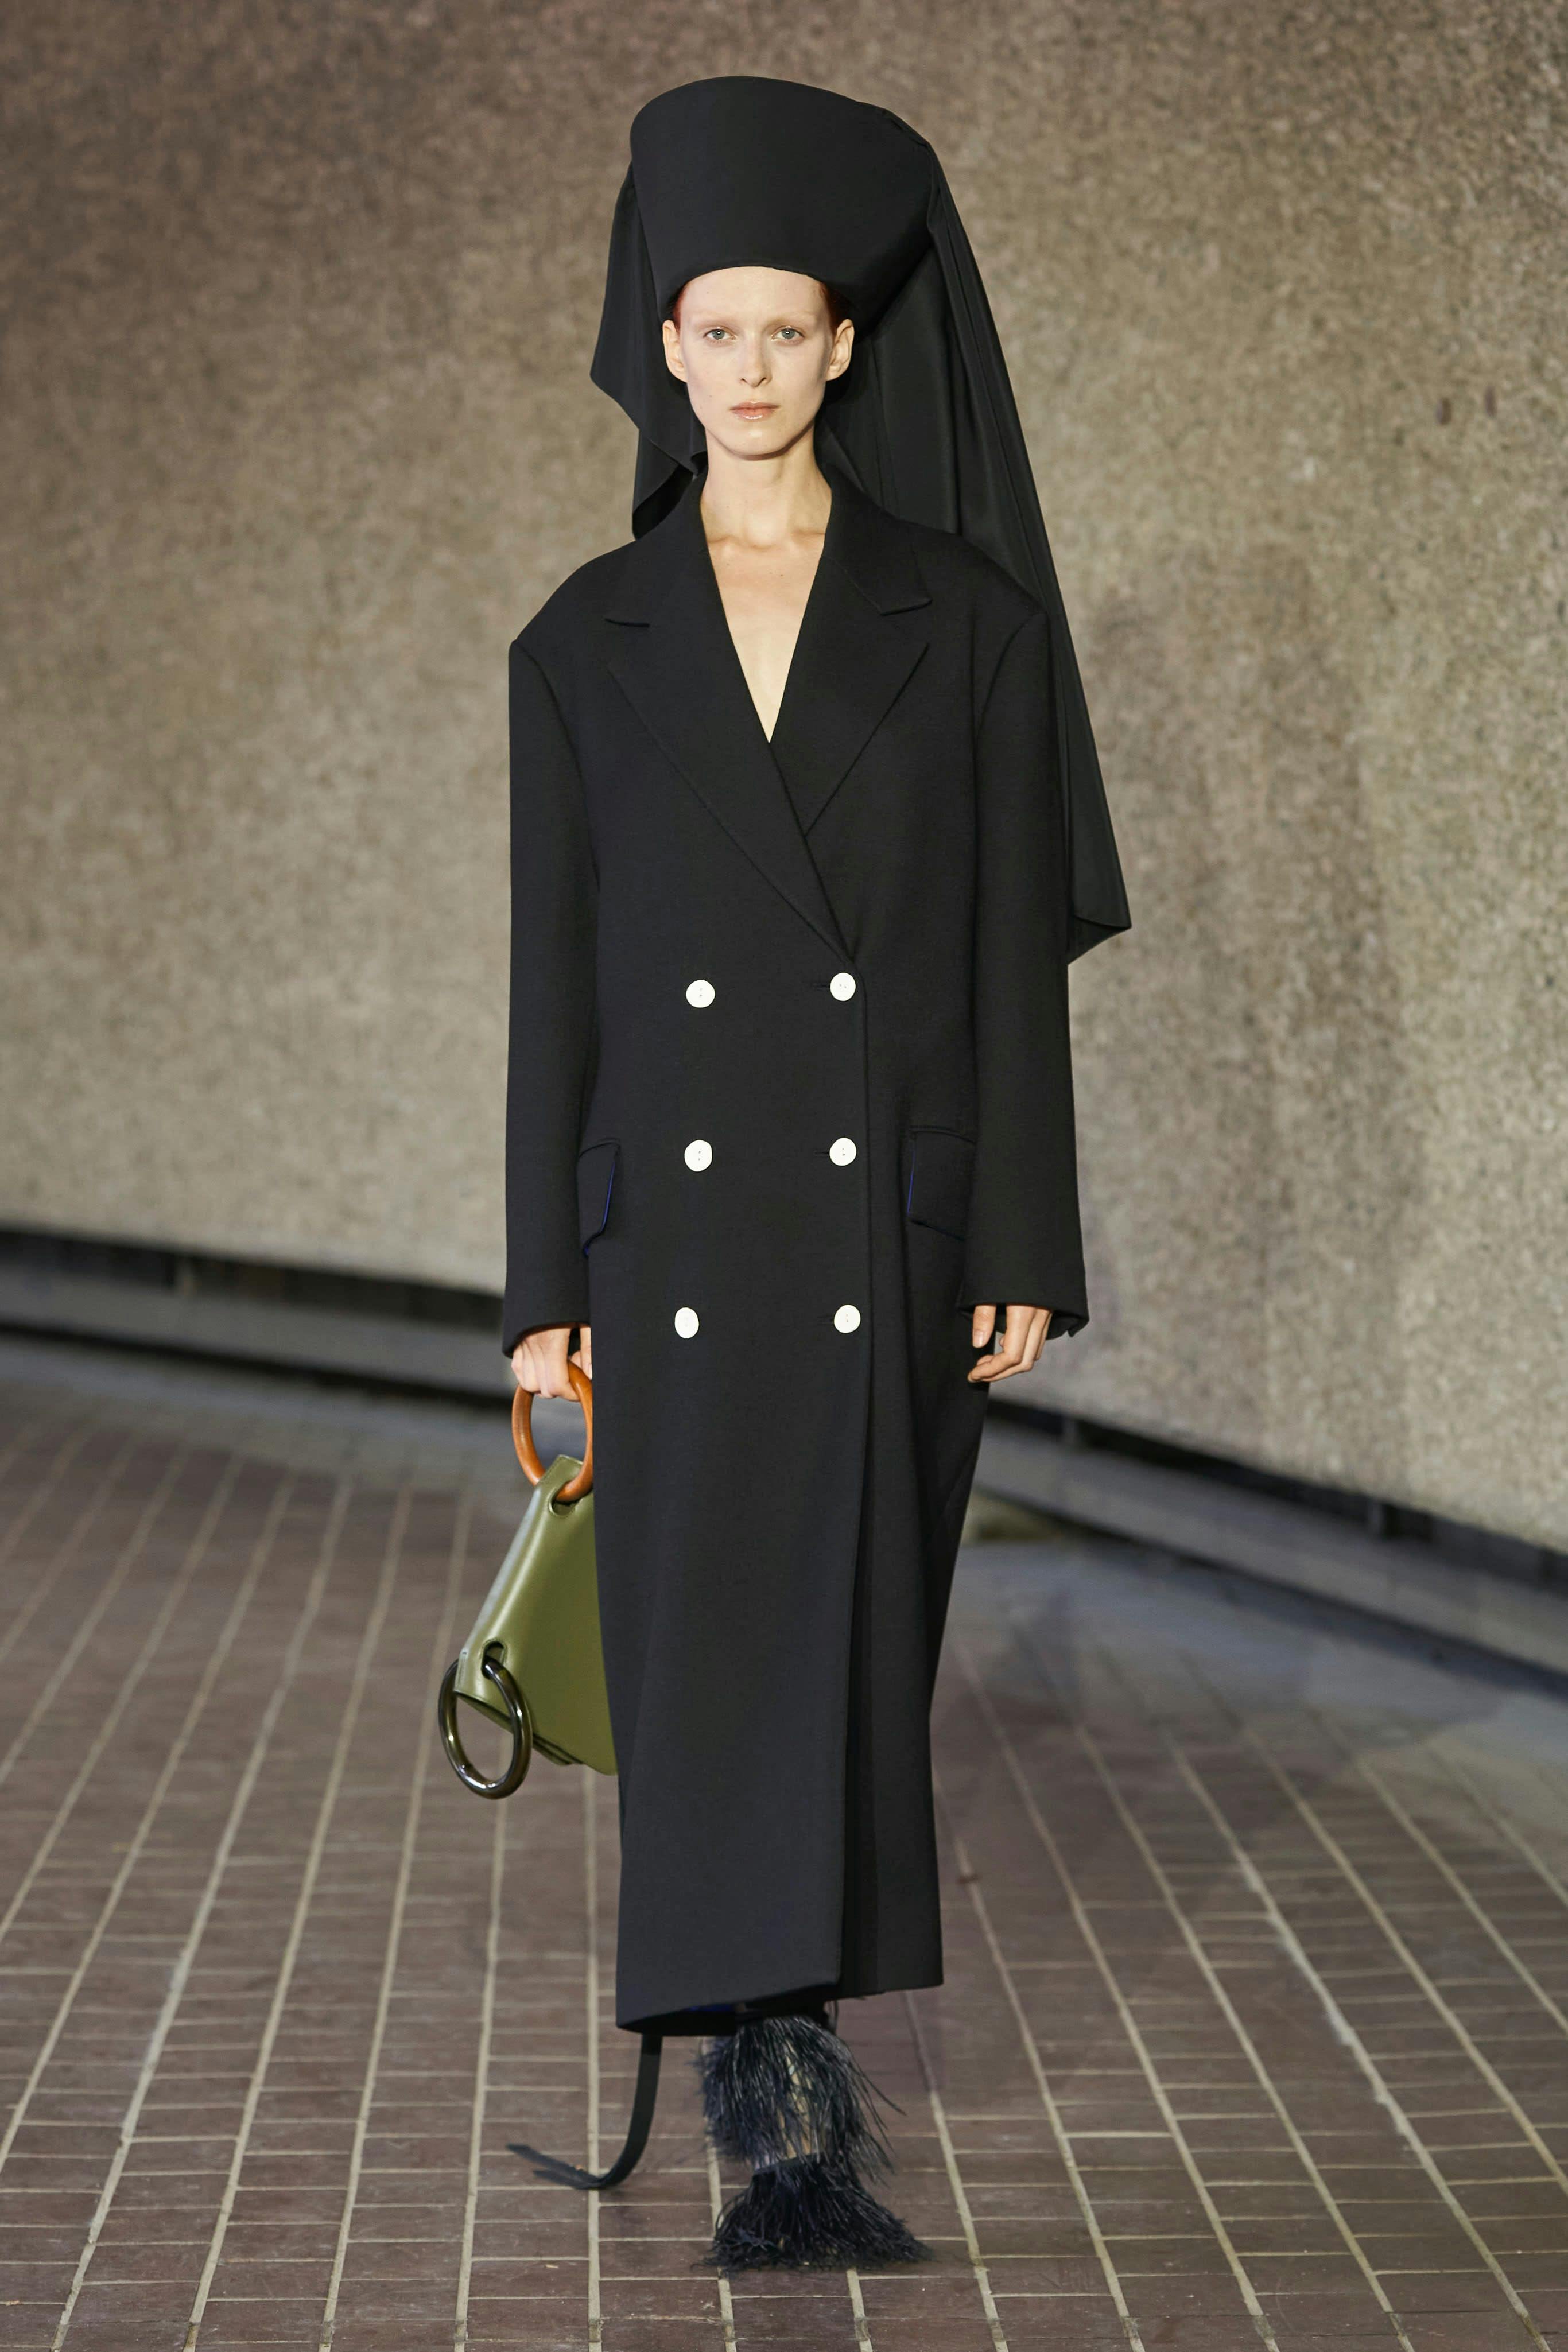 clothing coat overcoat lady person fashion